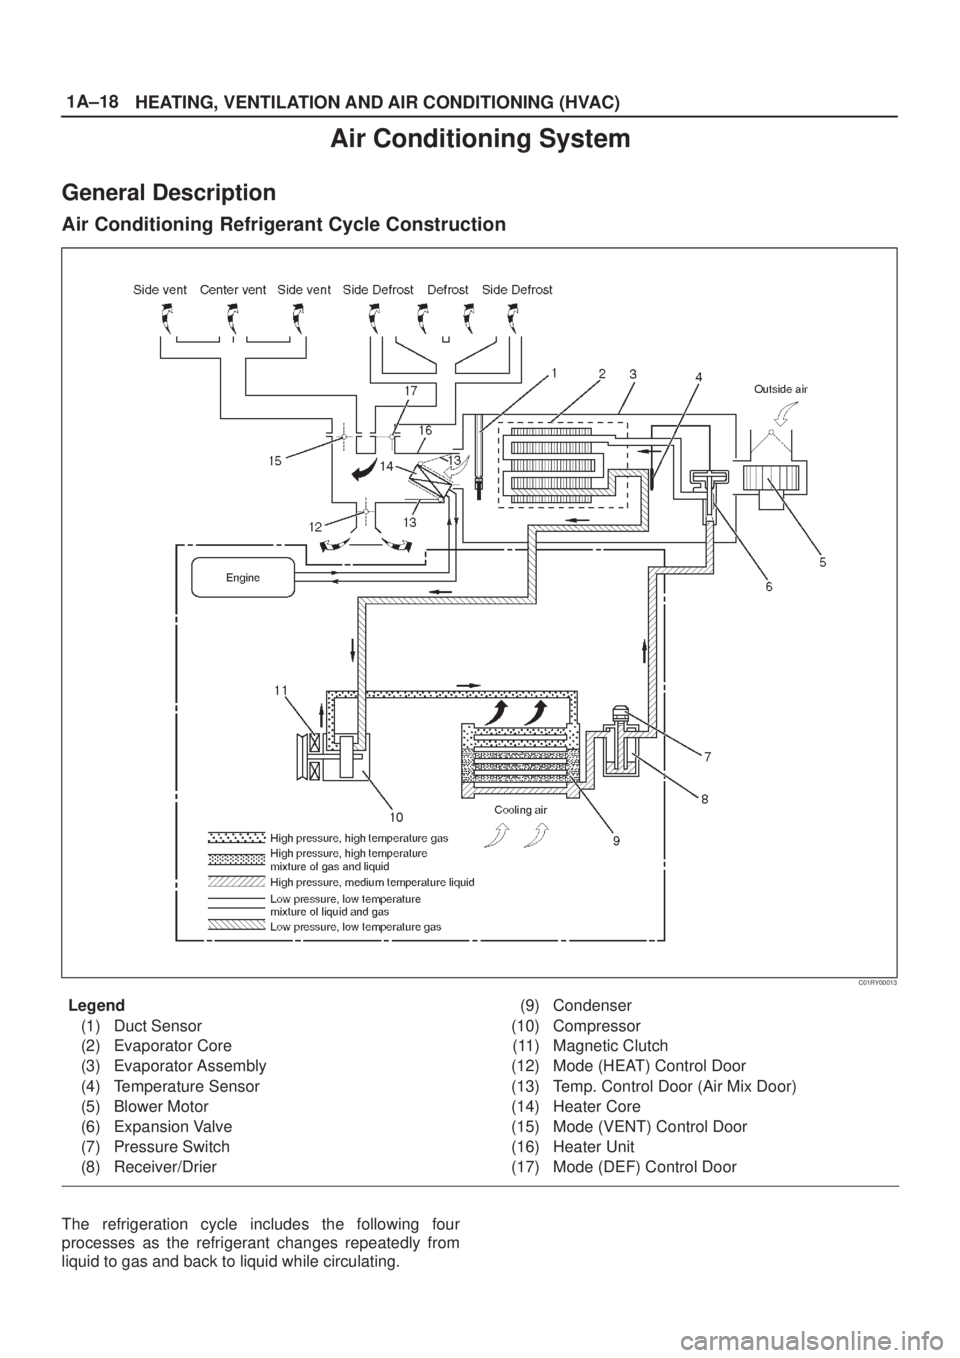 ISUZU AXIOM 2002  Service Service Manual 1A±18
HEATING, VENTILATION AND AIR CONDITIONING (HVAC)
Air Conditioning System
General Description
Air Conditioning Refrigerant Cycle Construction
C01RY00013
Legend
(1) Duct Sensor
(2) Evaporator Cor